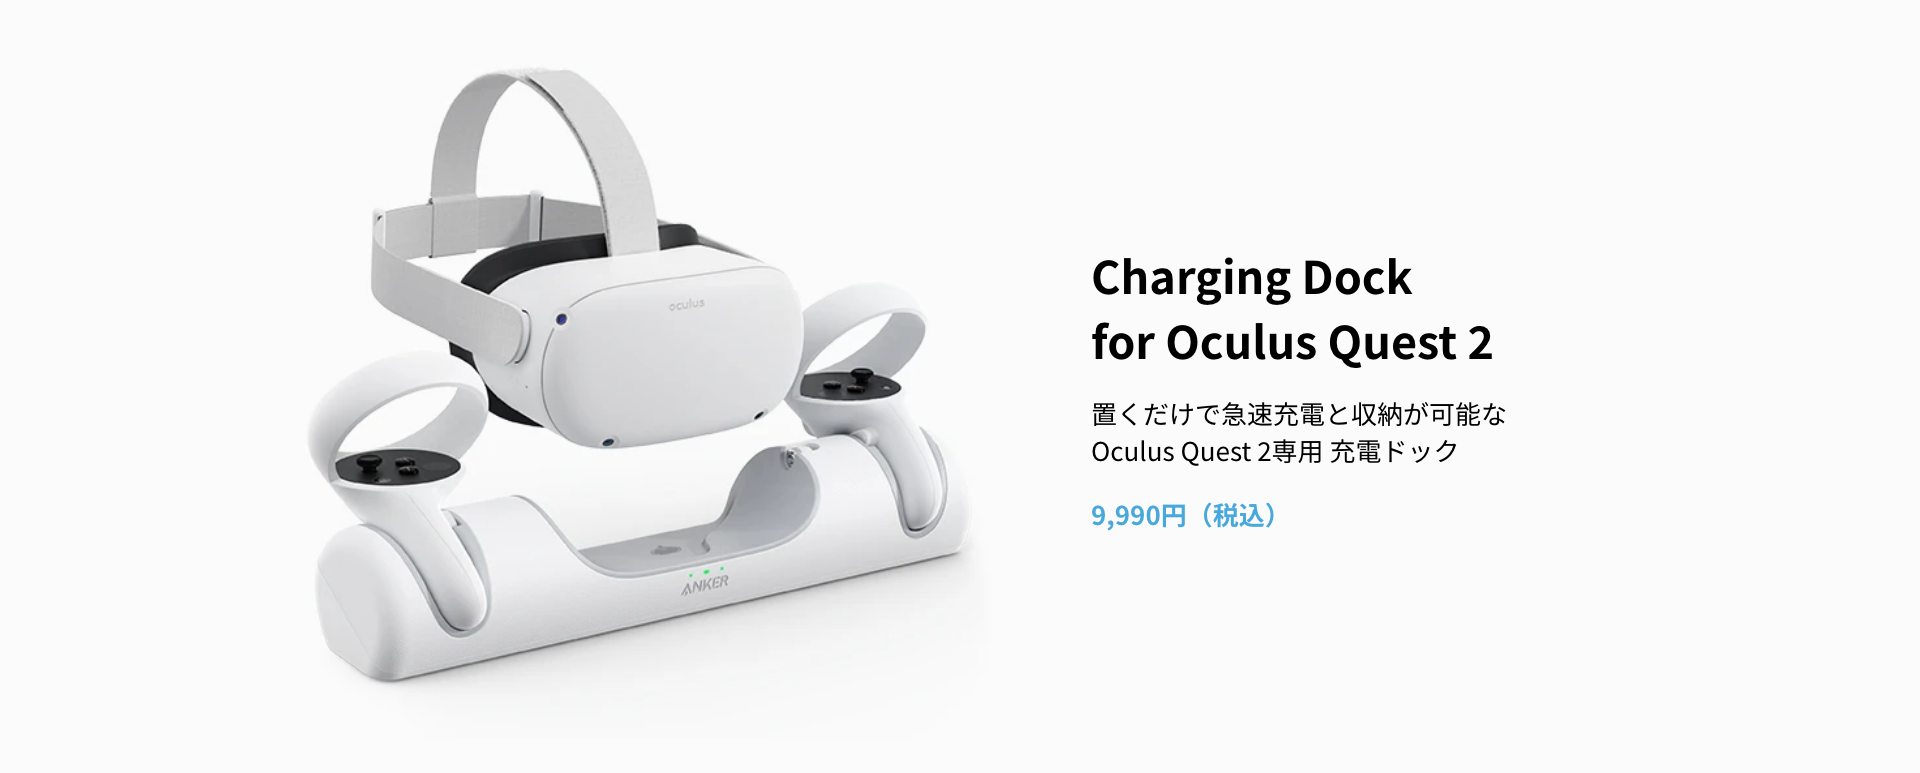 Charging Dock for Oculus Quest 2 | Anker Japan公式サイト